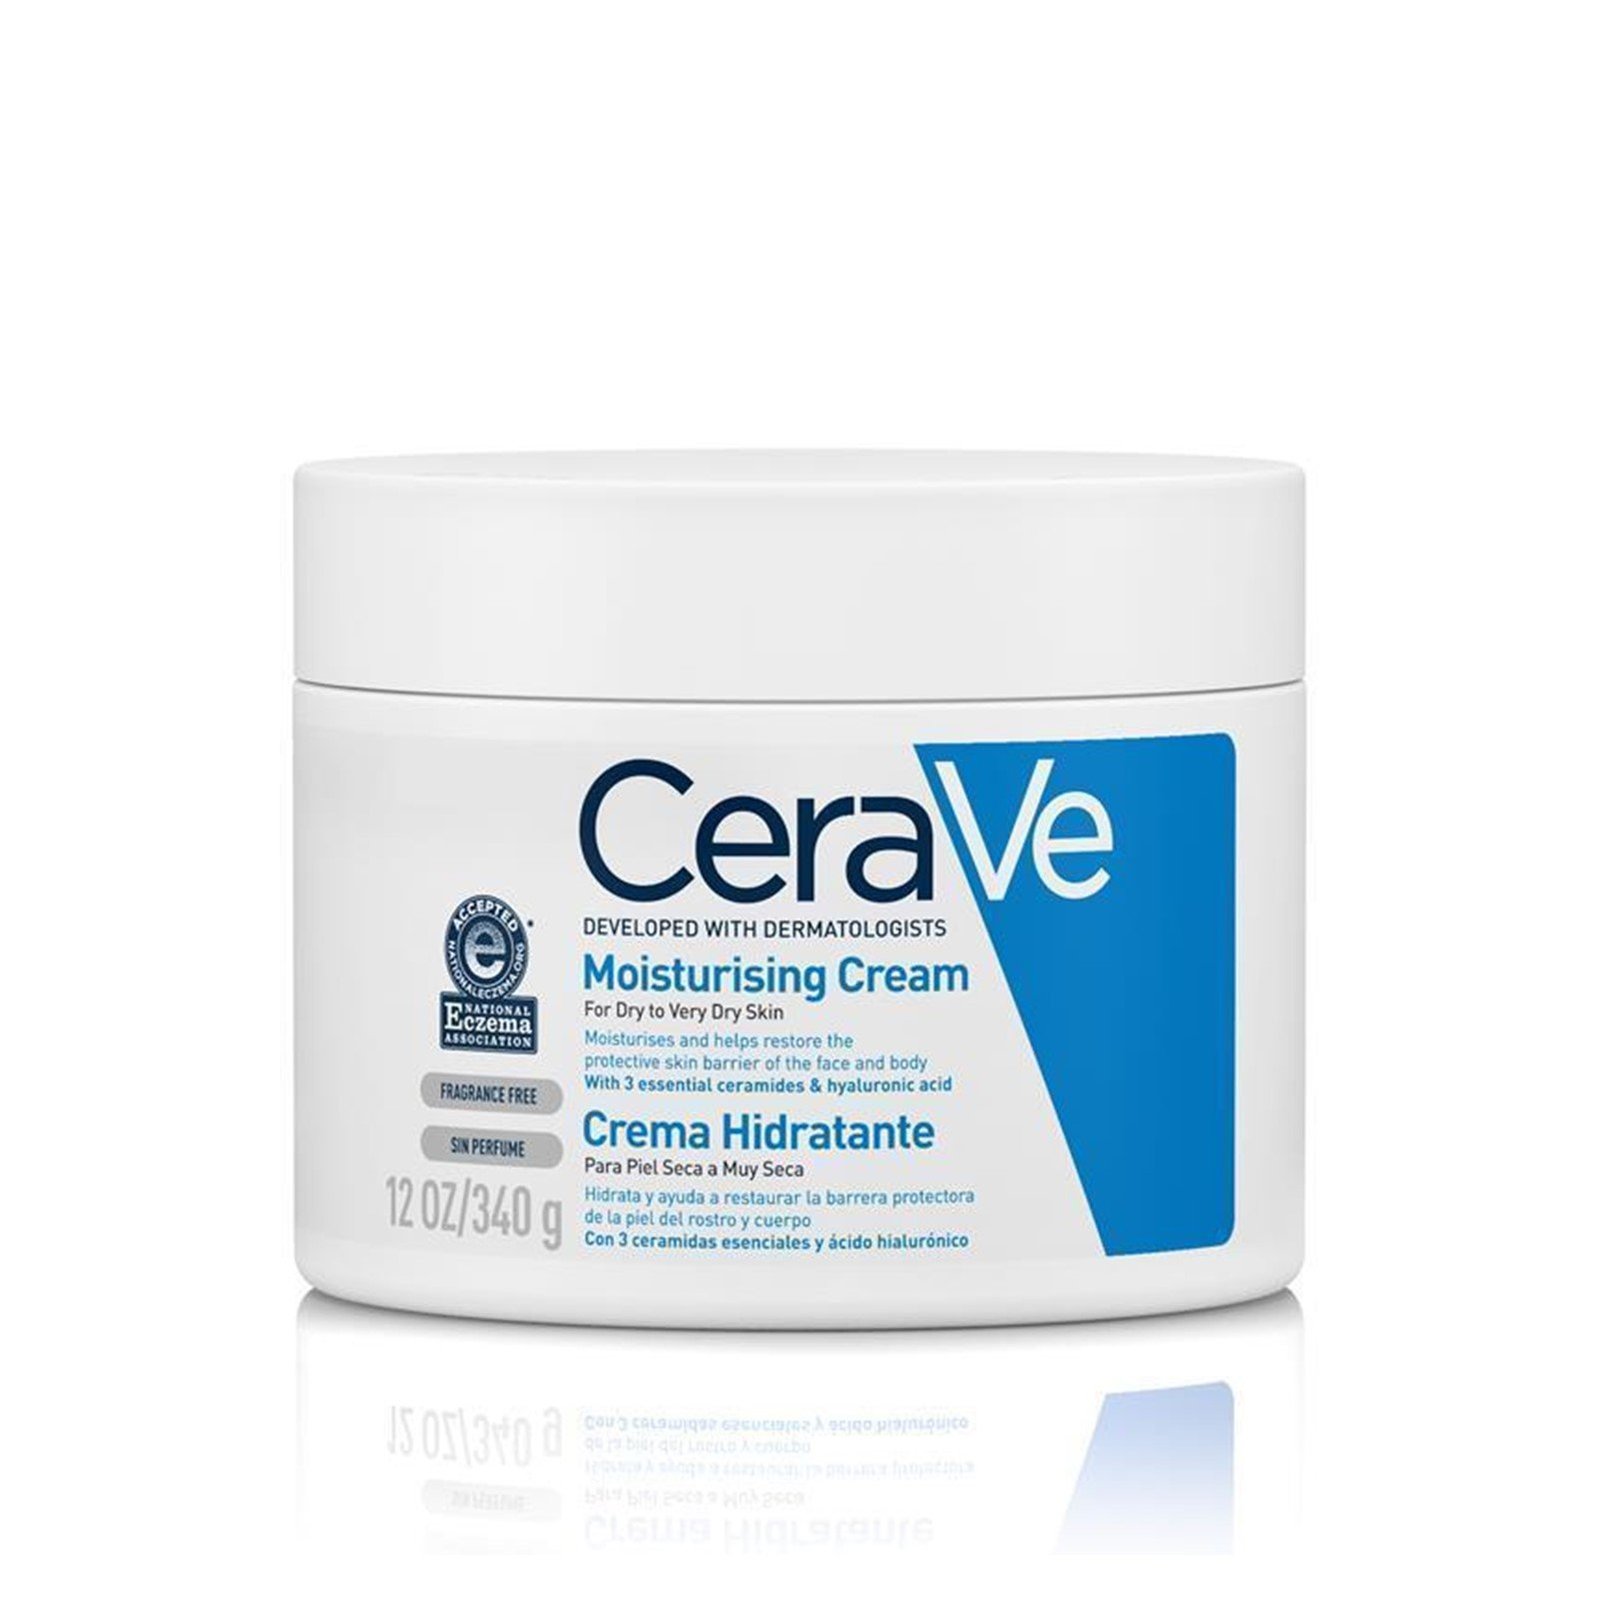 https://static.beautytocare.com/cdn-cgi/image/width=1600,height=1600,f=auto/media/catalog/product//c/e/cerave-moisturizing-cream-dry-to-very-dry-skin-340g.jpg